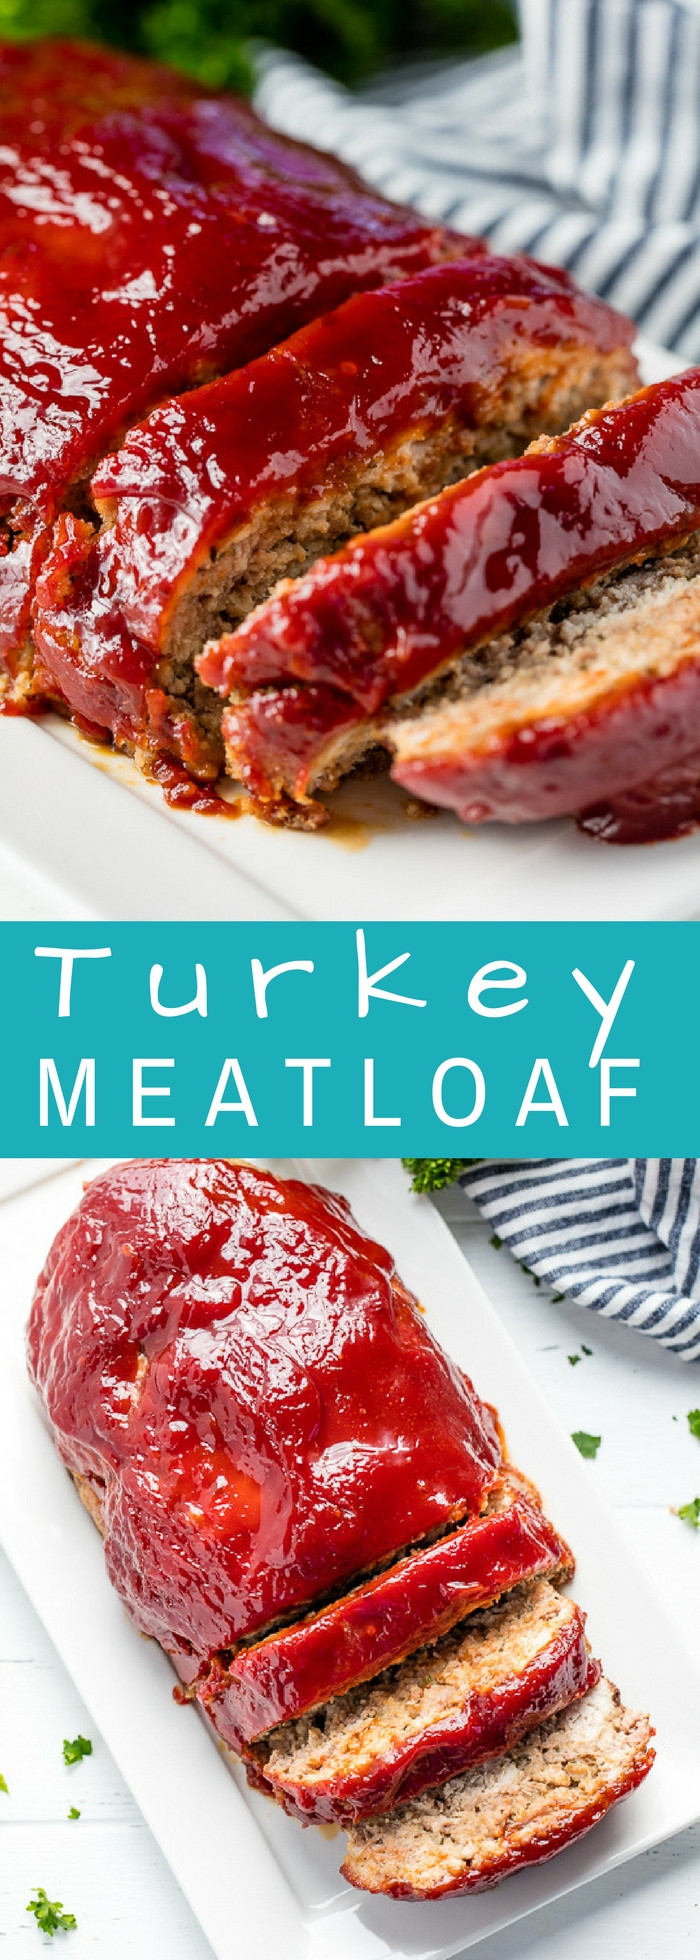 Turkey Meatloaf Healthy
 Turkey Meatloaf